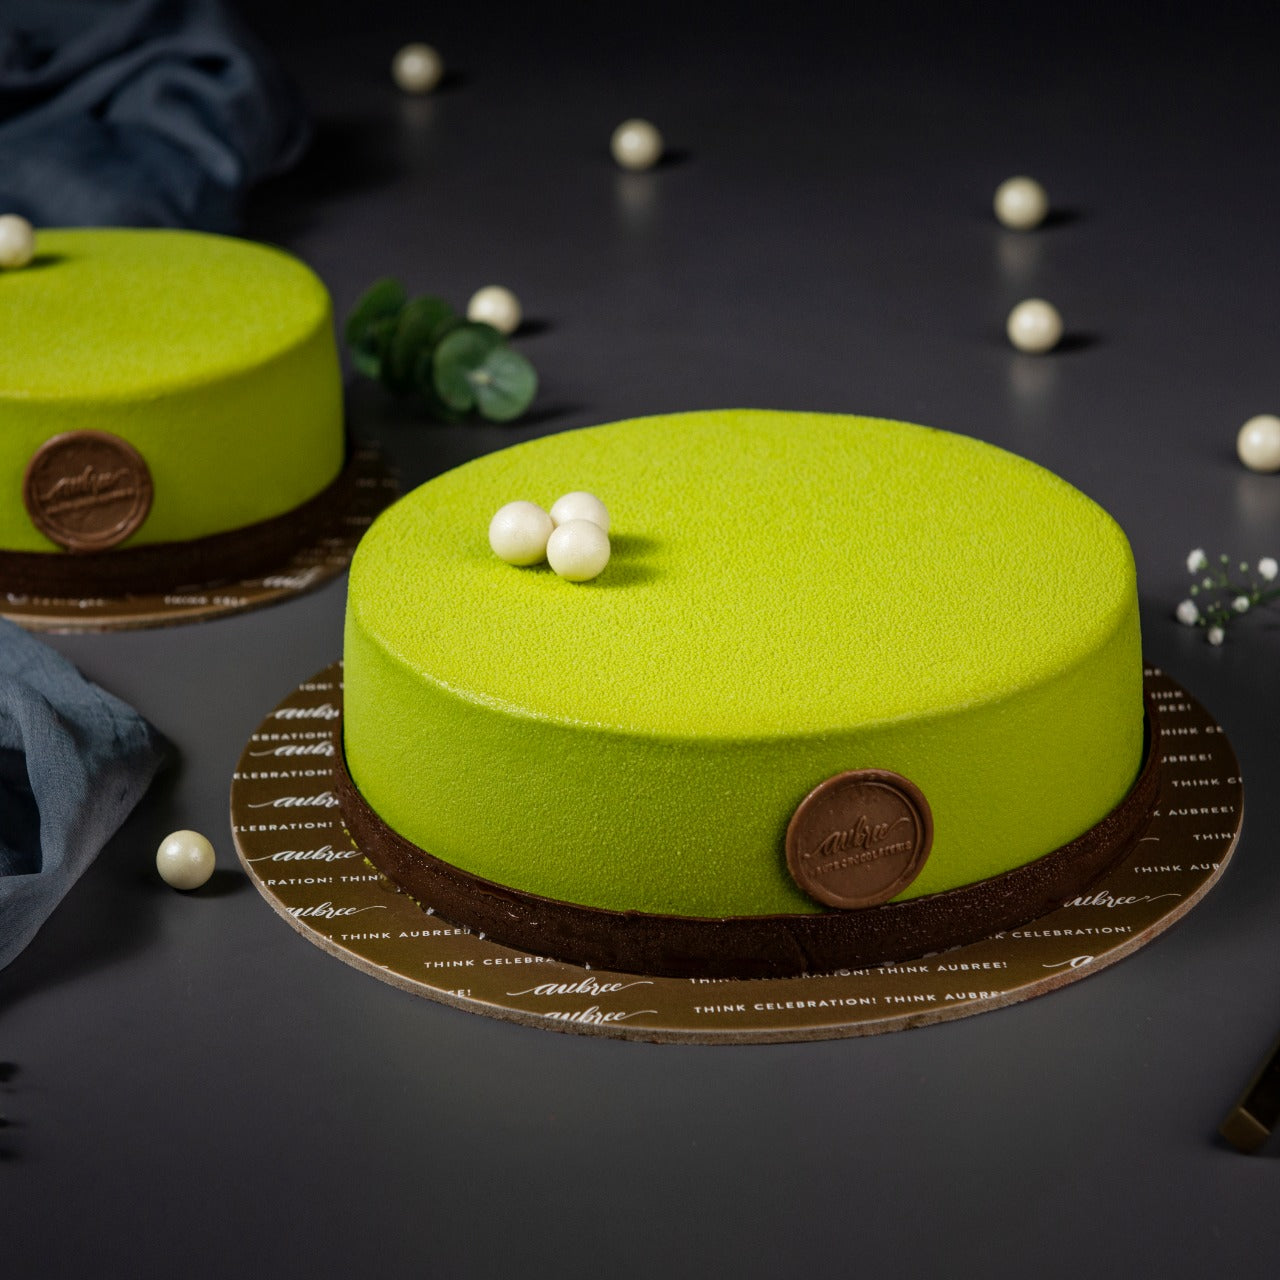 Science Theme Cake | Aubree Haute Chocolaterie | Reviews on Judge.me